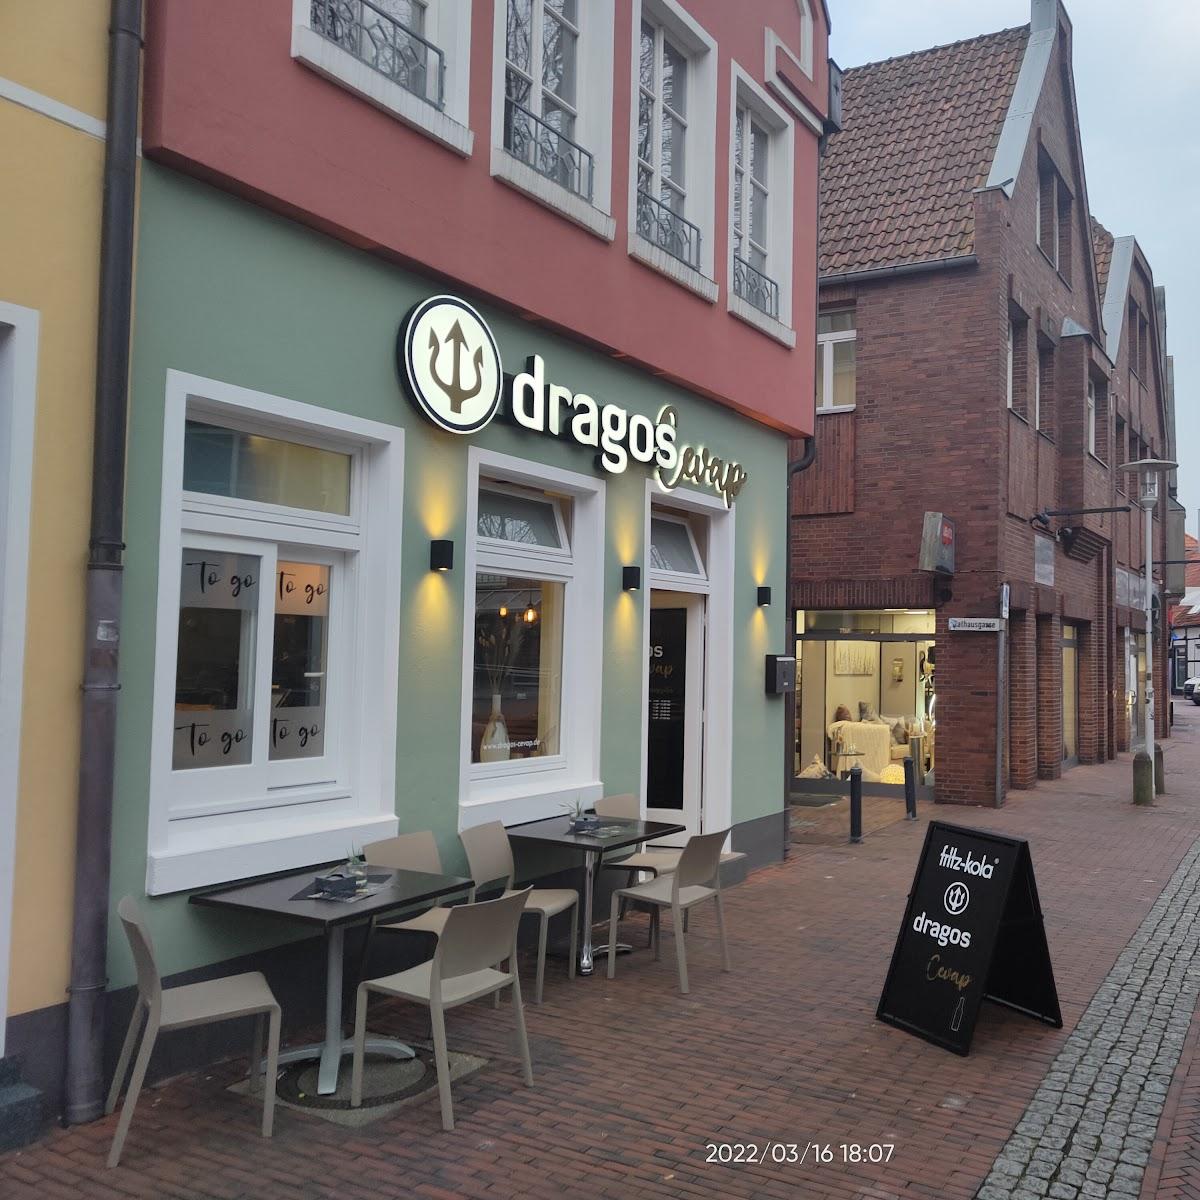 Restaurant "Dragos Cevap" in Lingen (Ems)